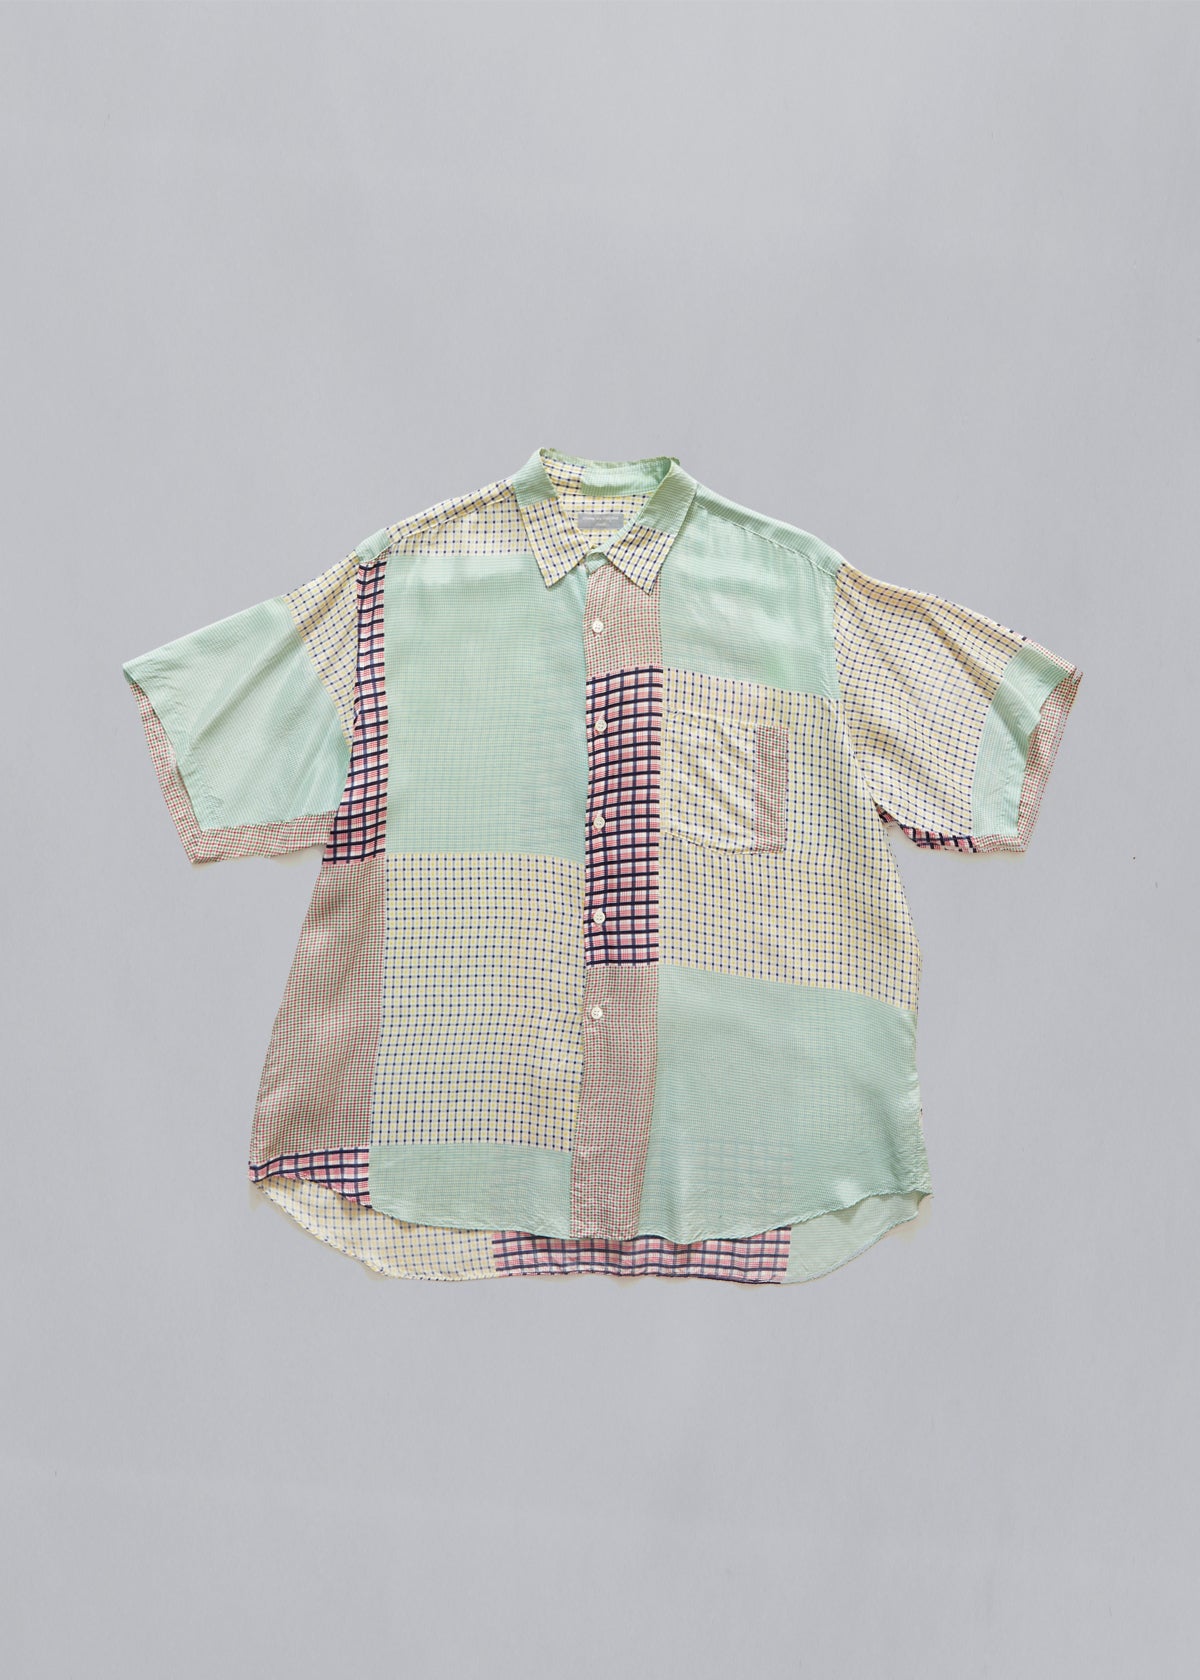 CDG Homme Multicolor Patchwork Silk Shirt 1997 - Large